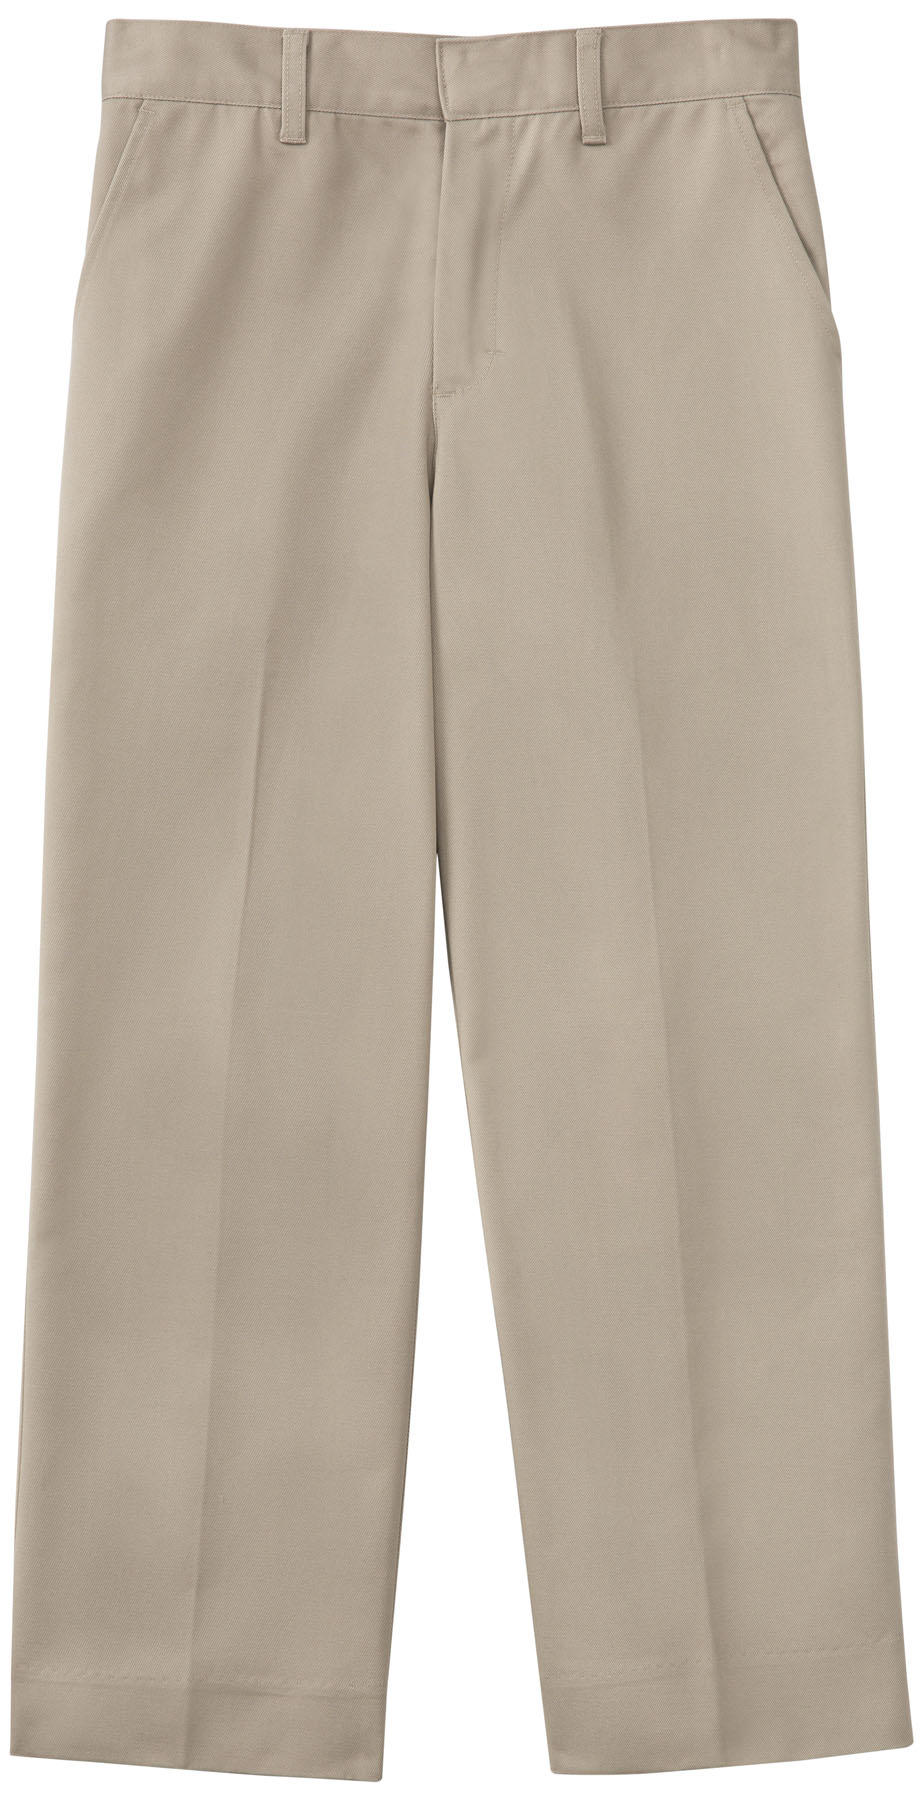 ESA-Boys Khaki Pant-Slim fit(size 8-20)